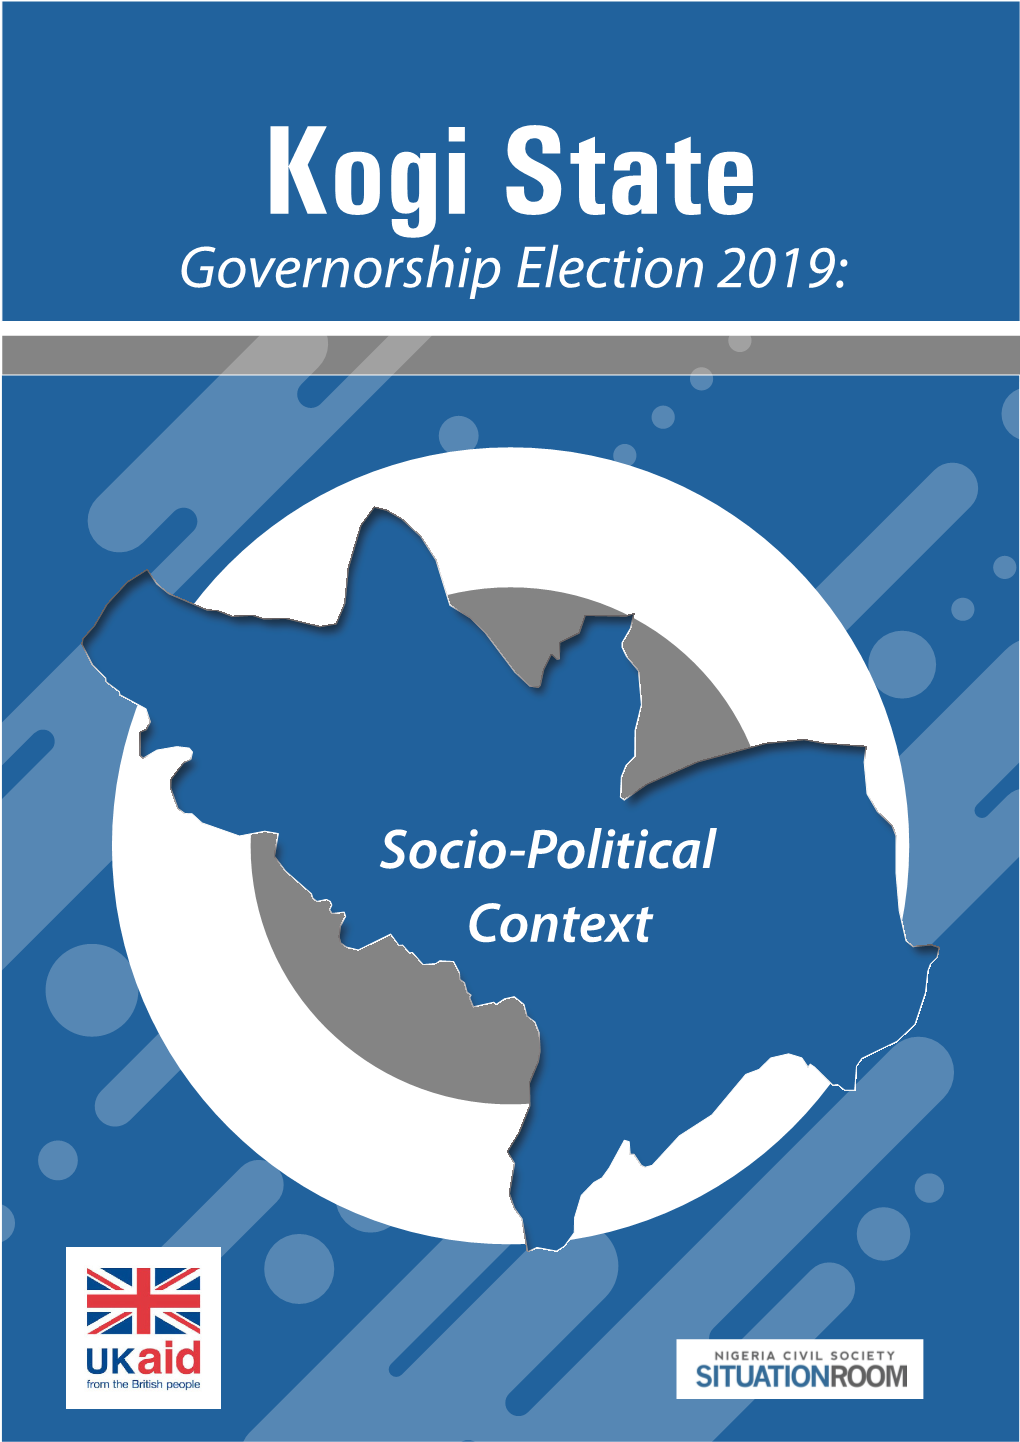 Kogi State Governorship Election 2019: Kogi State Governorship Election 2019